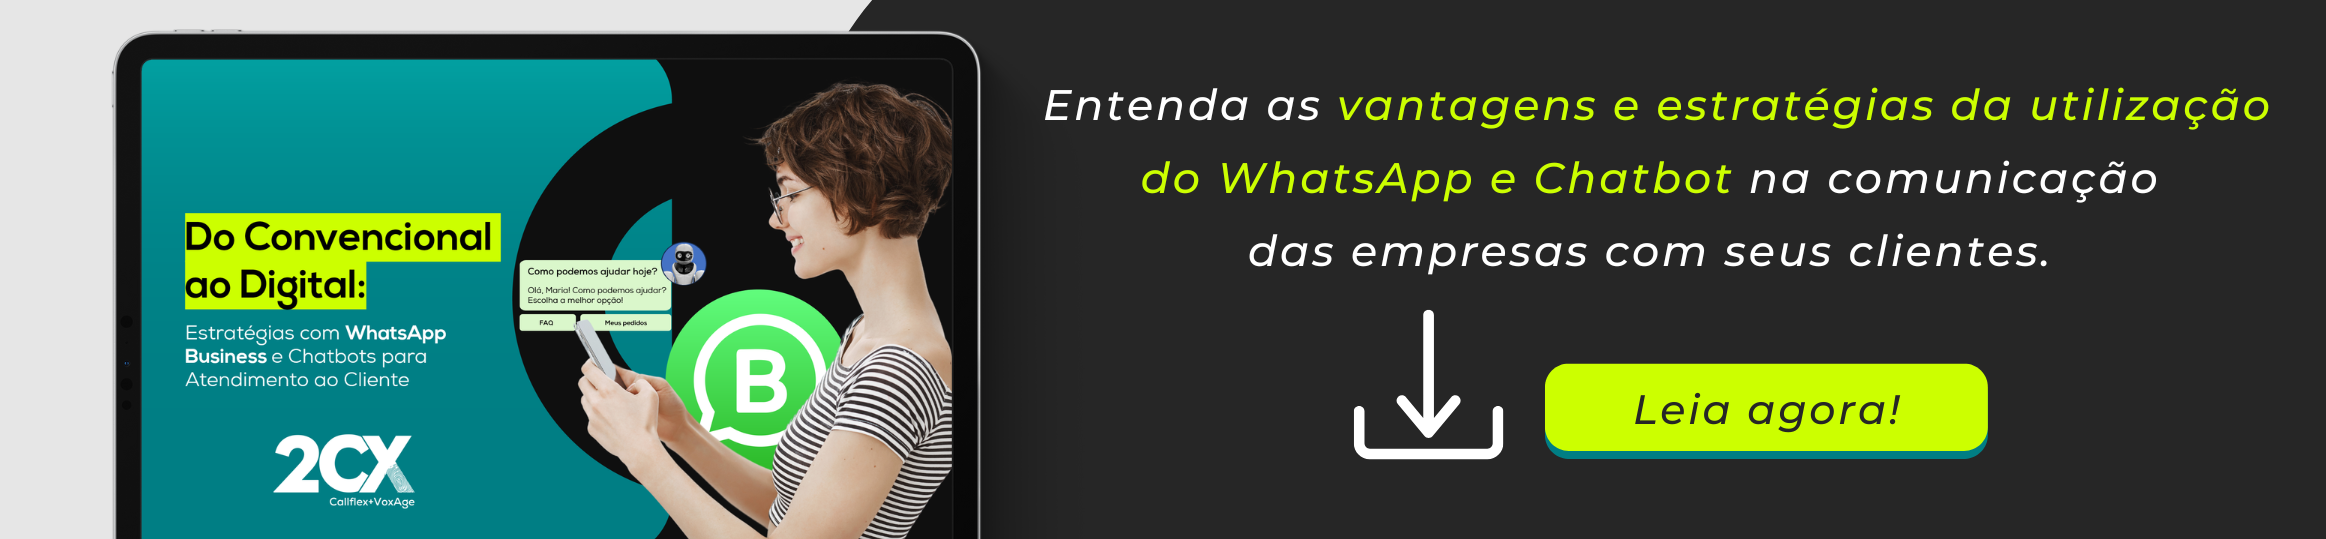 WhatsApp Business API